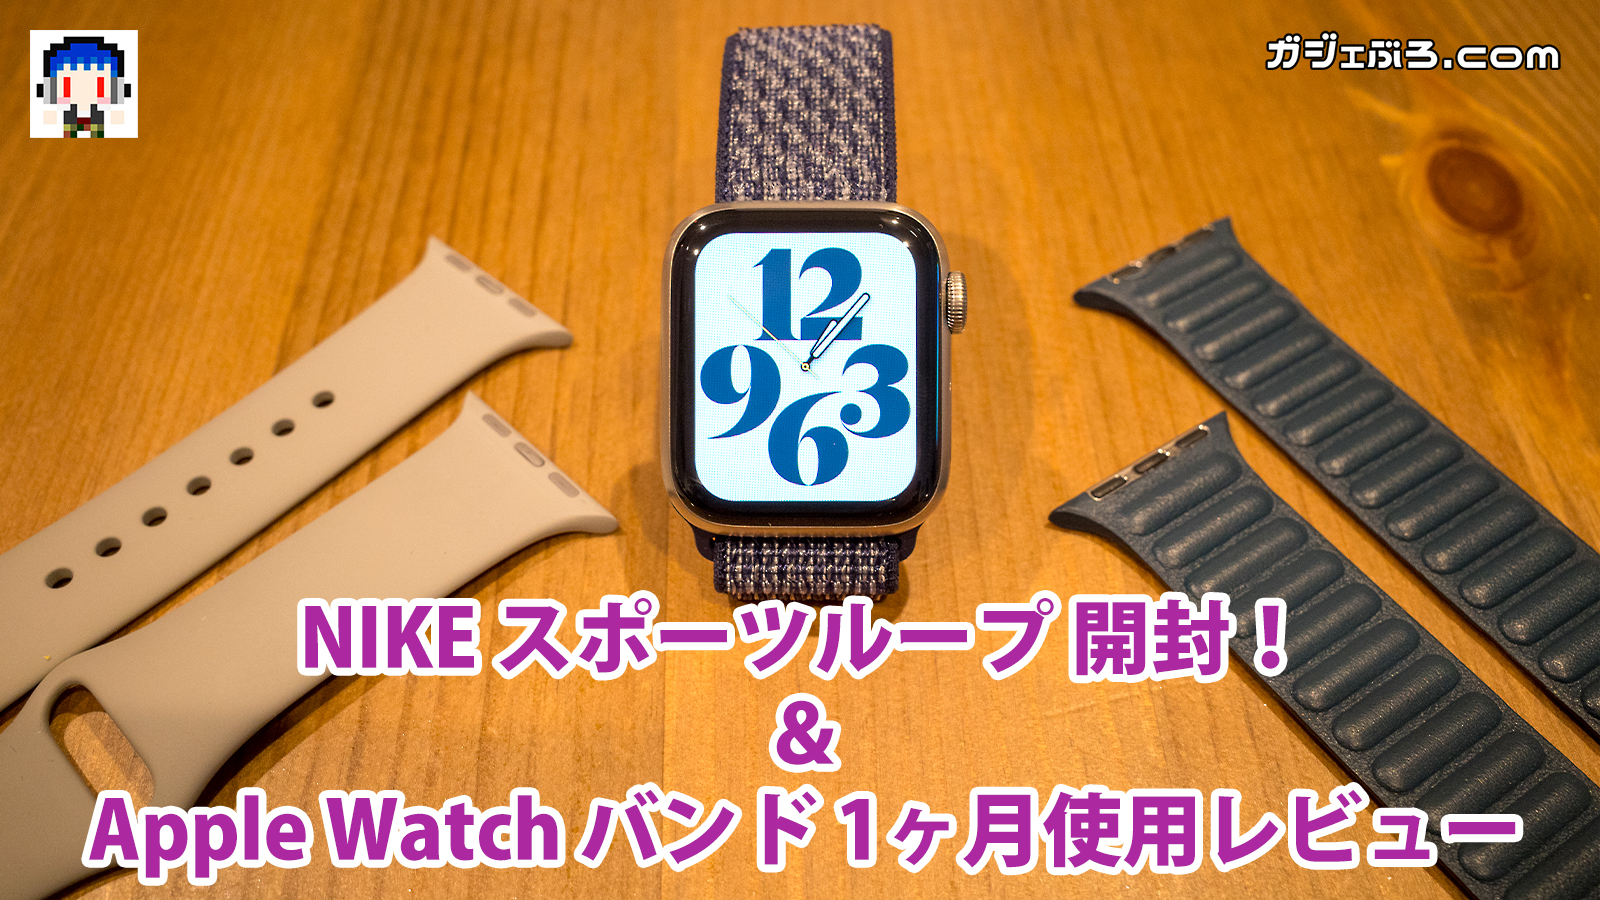 Apple watch series 4 nike ループ 未開封